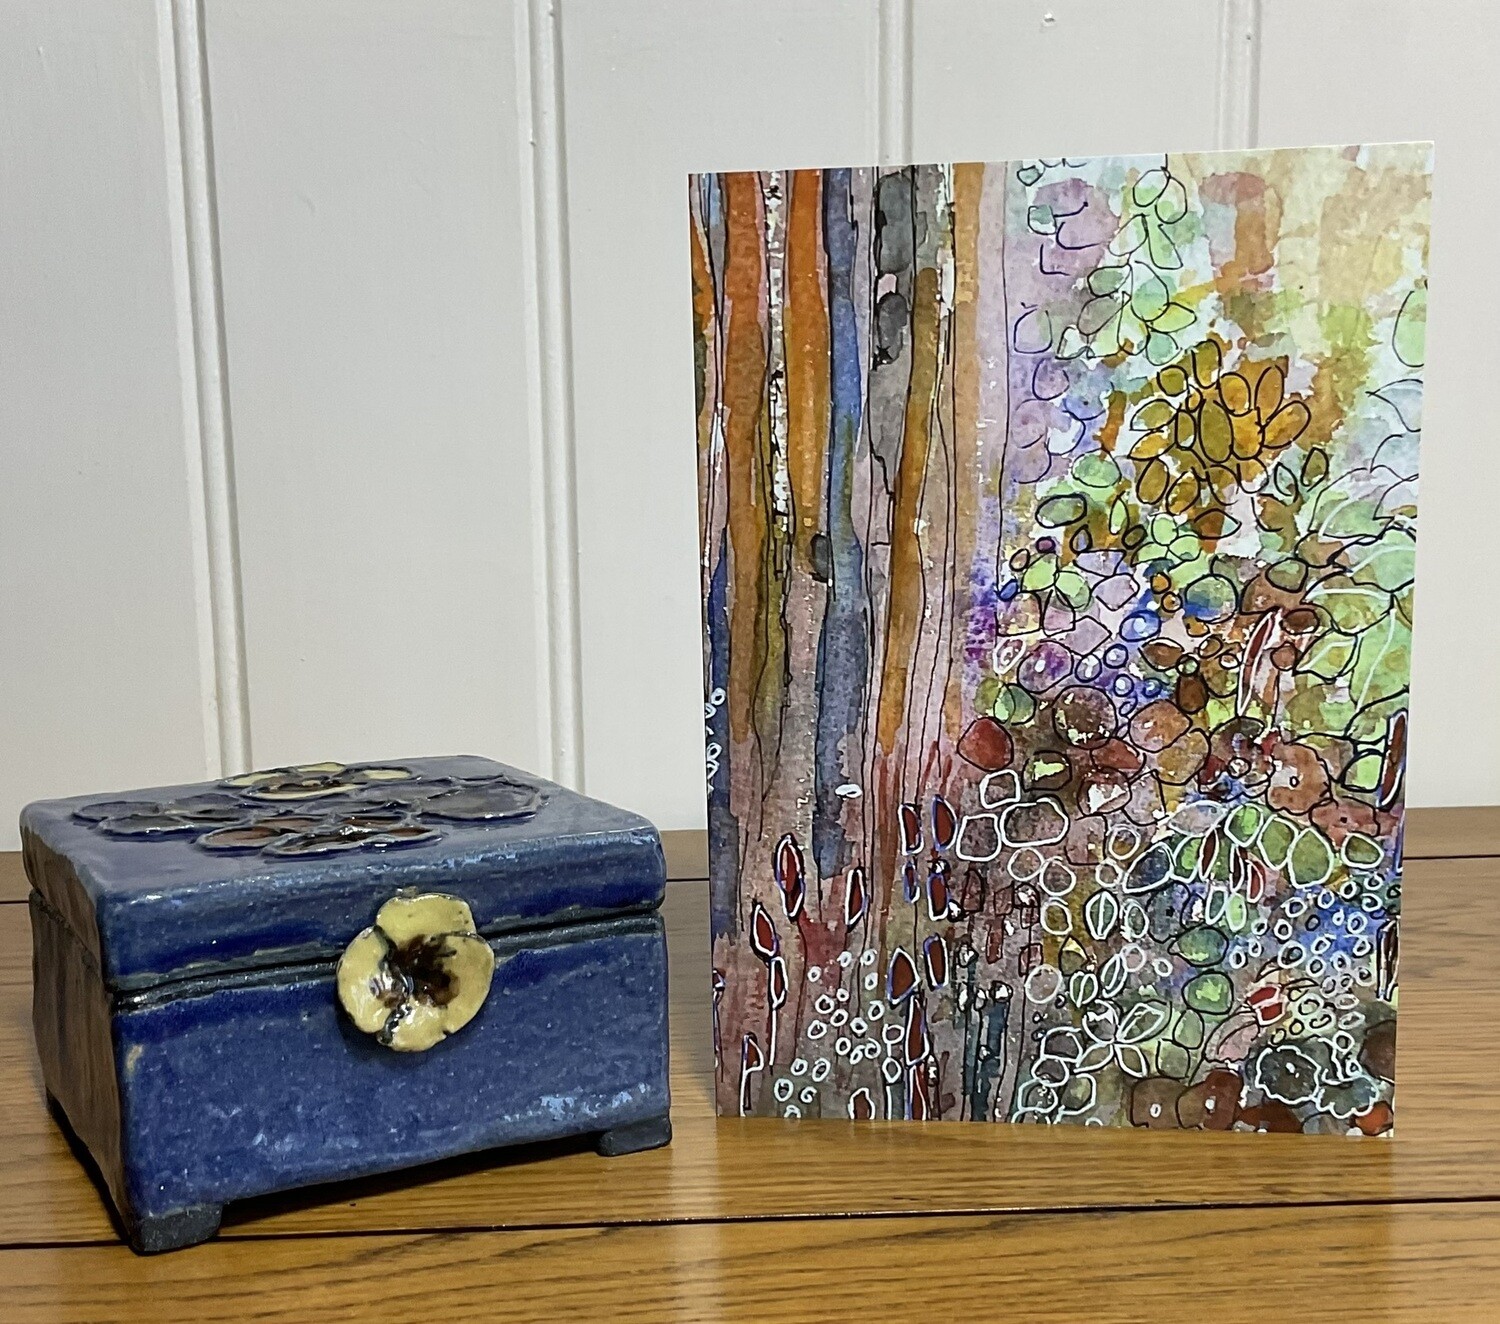 New Card Set "Spring Wood"